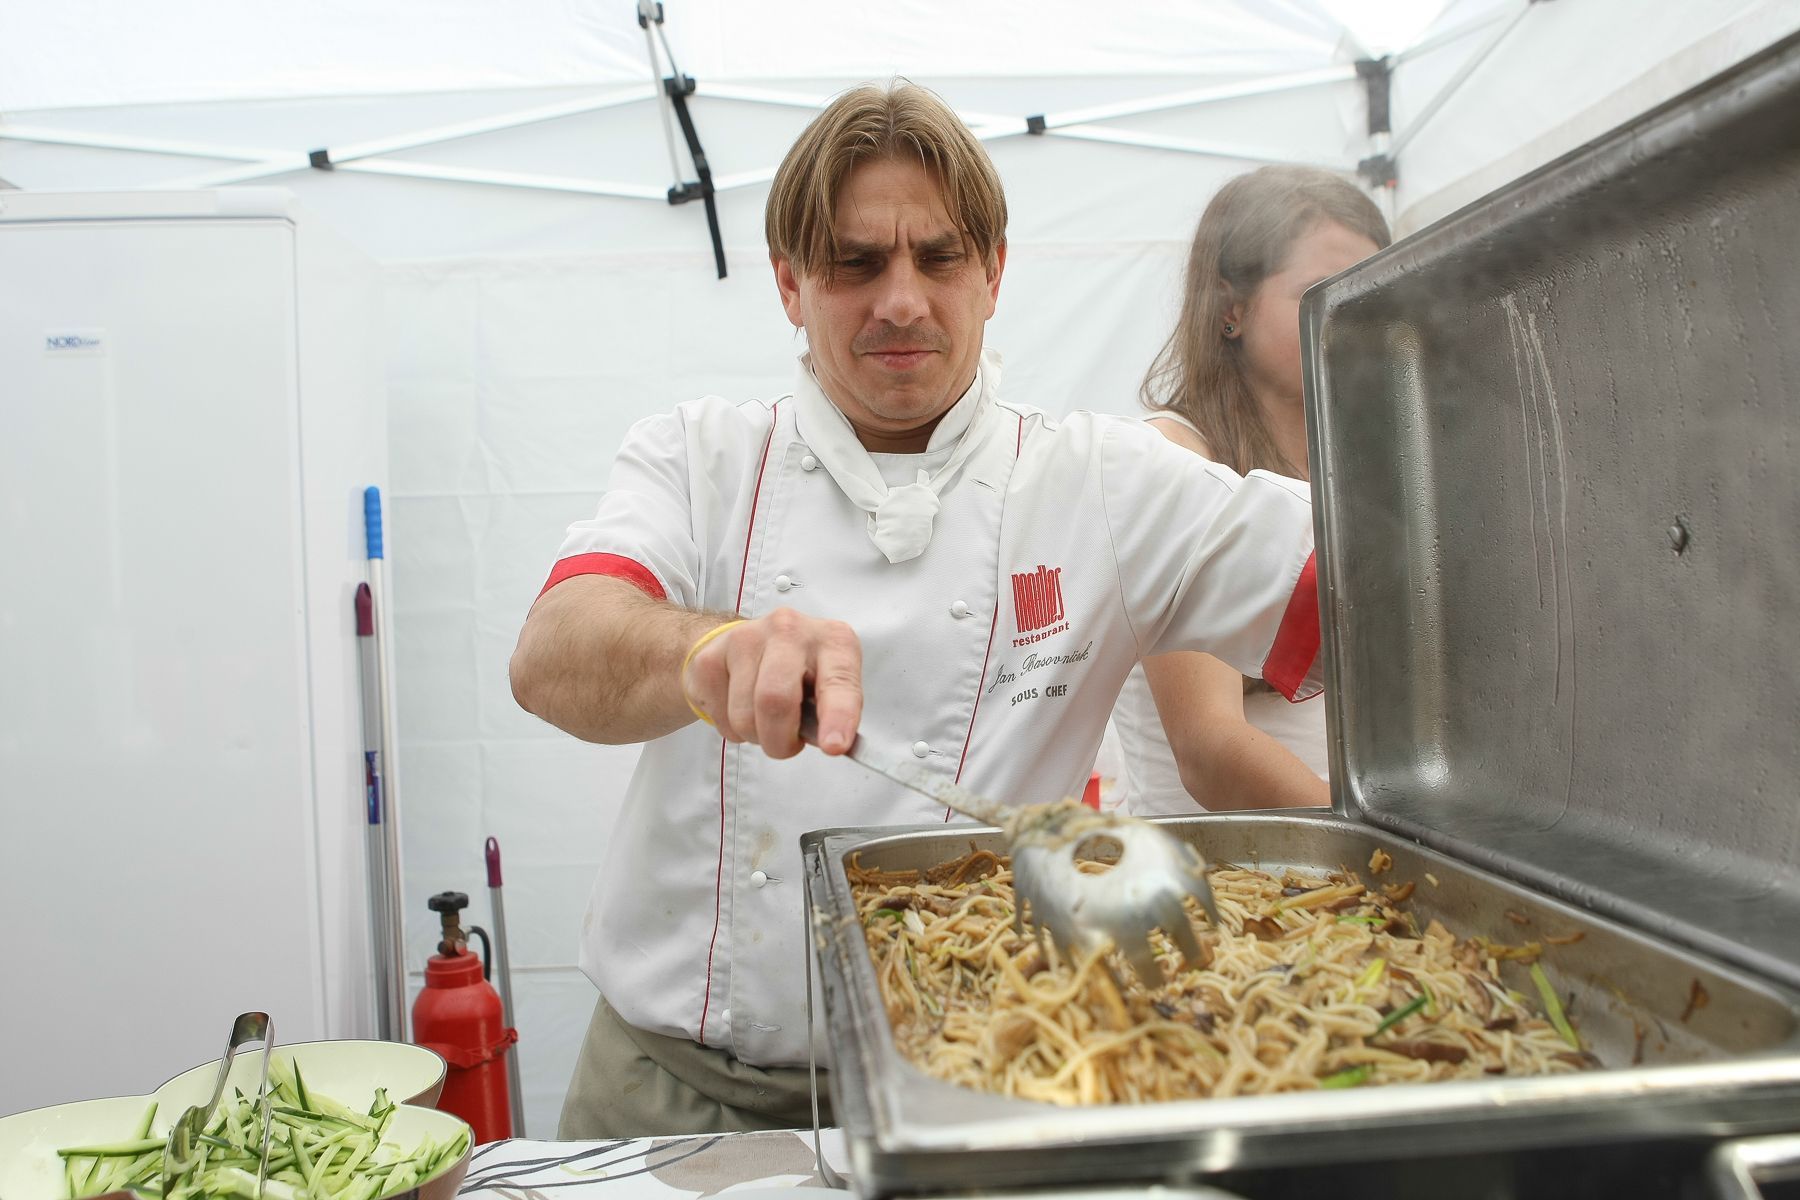 Prague Food Festival 2015